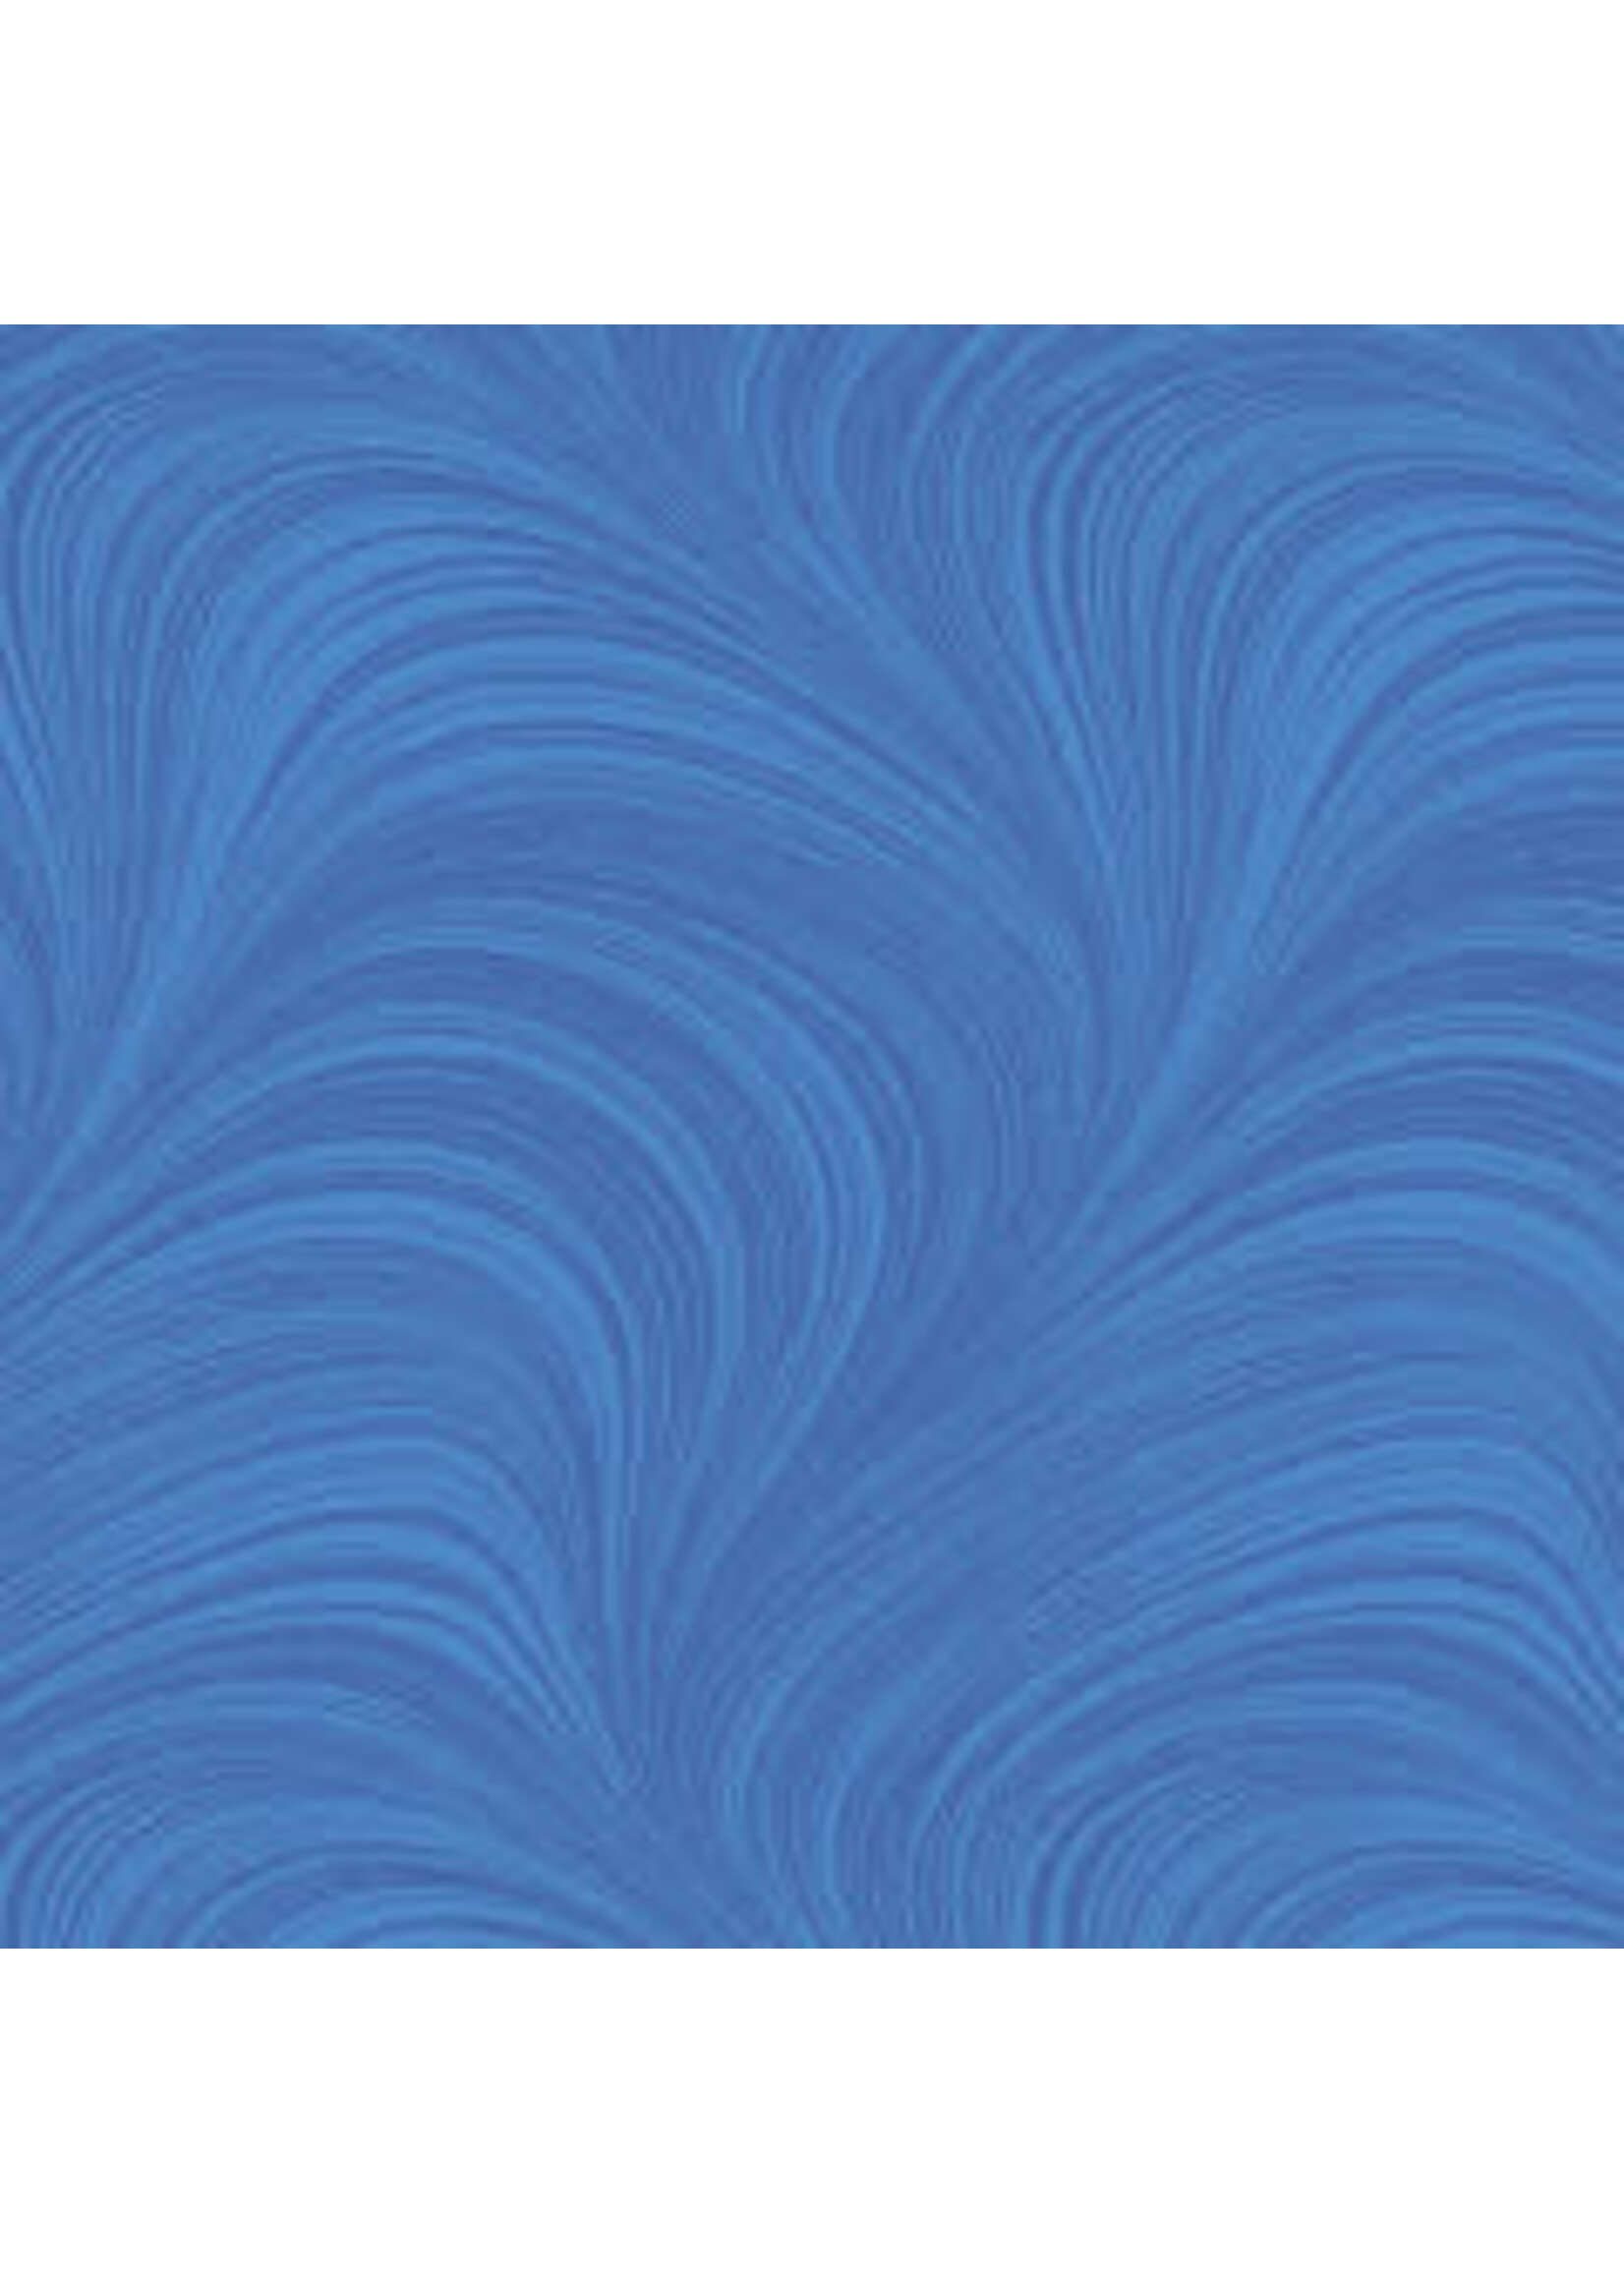 Benartex Studio Wave Texture - Flanel - MedBlue - Coupon - 90 cm x 275 cm